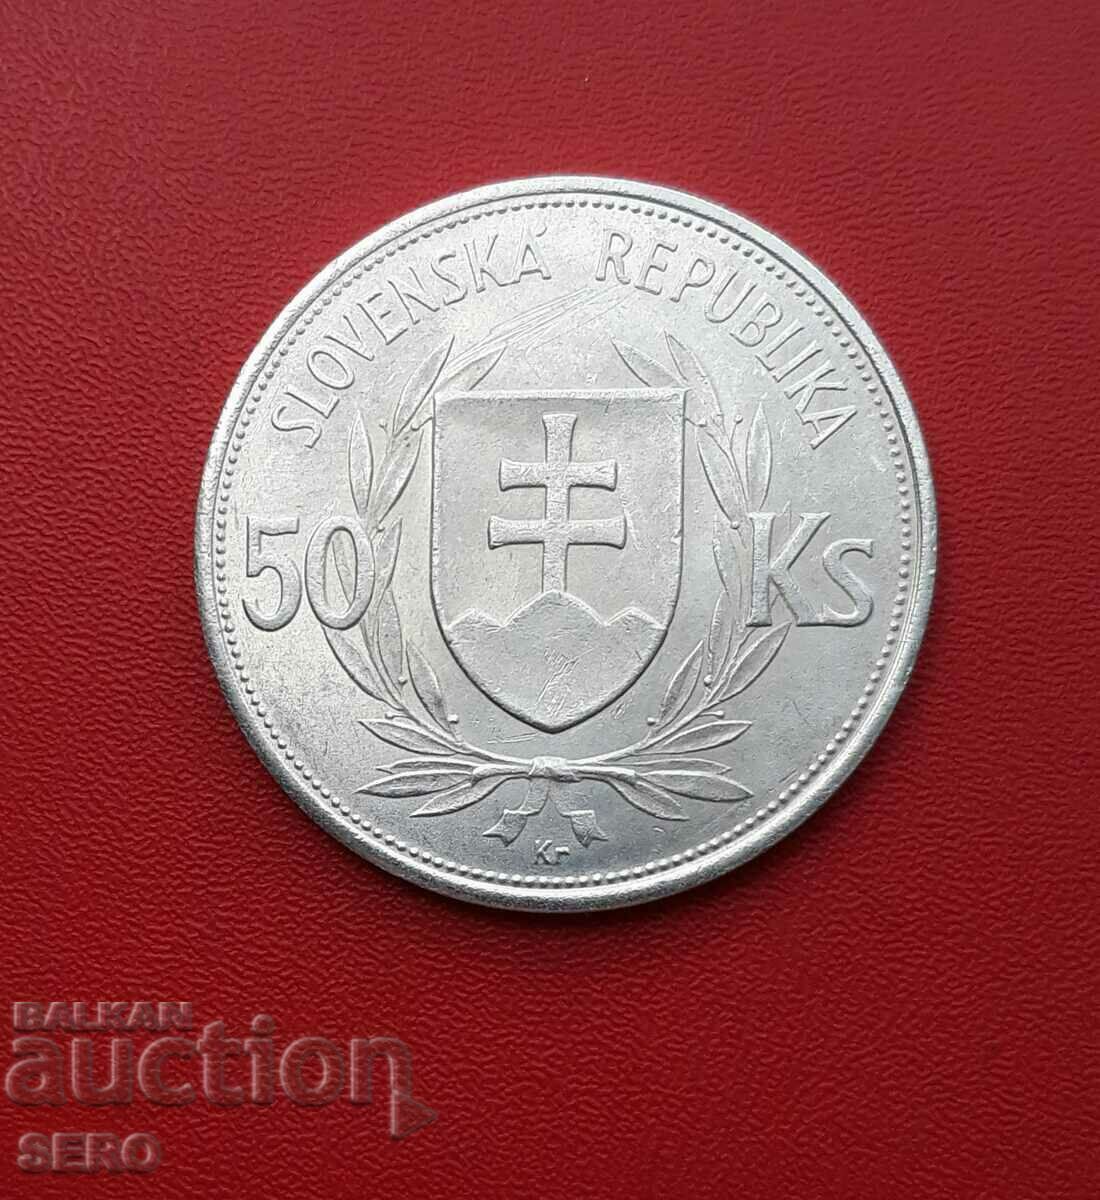 Slovacia-50 de coroane 1944-argint